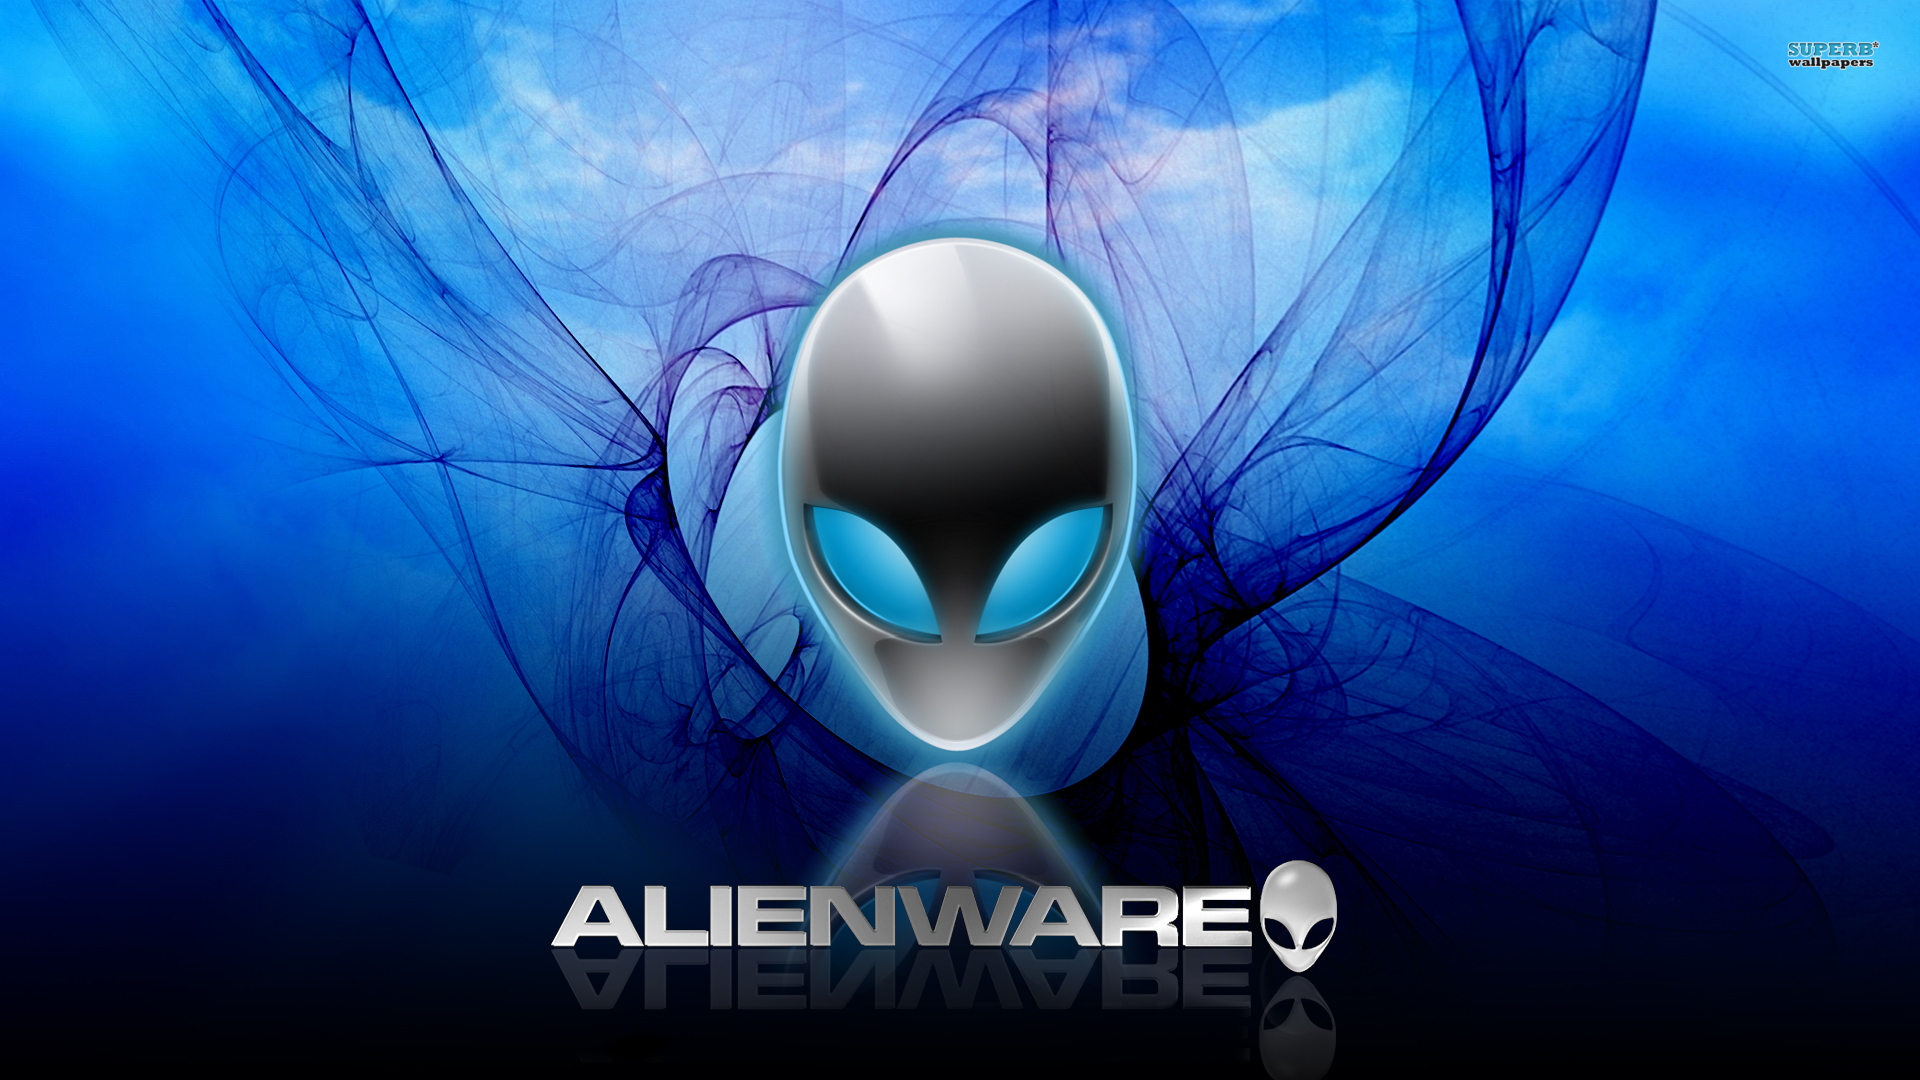 Alienware Wallpaper HD - CuteWallpaper.org